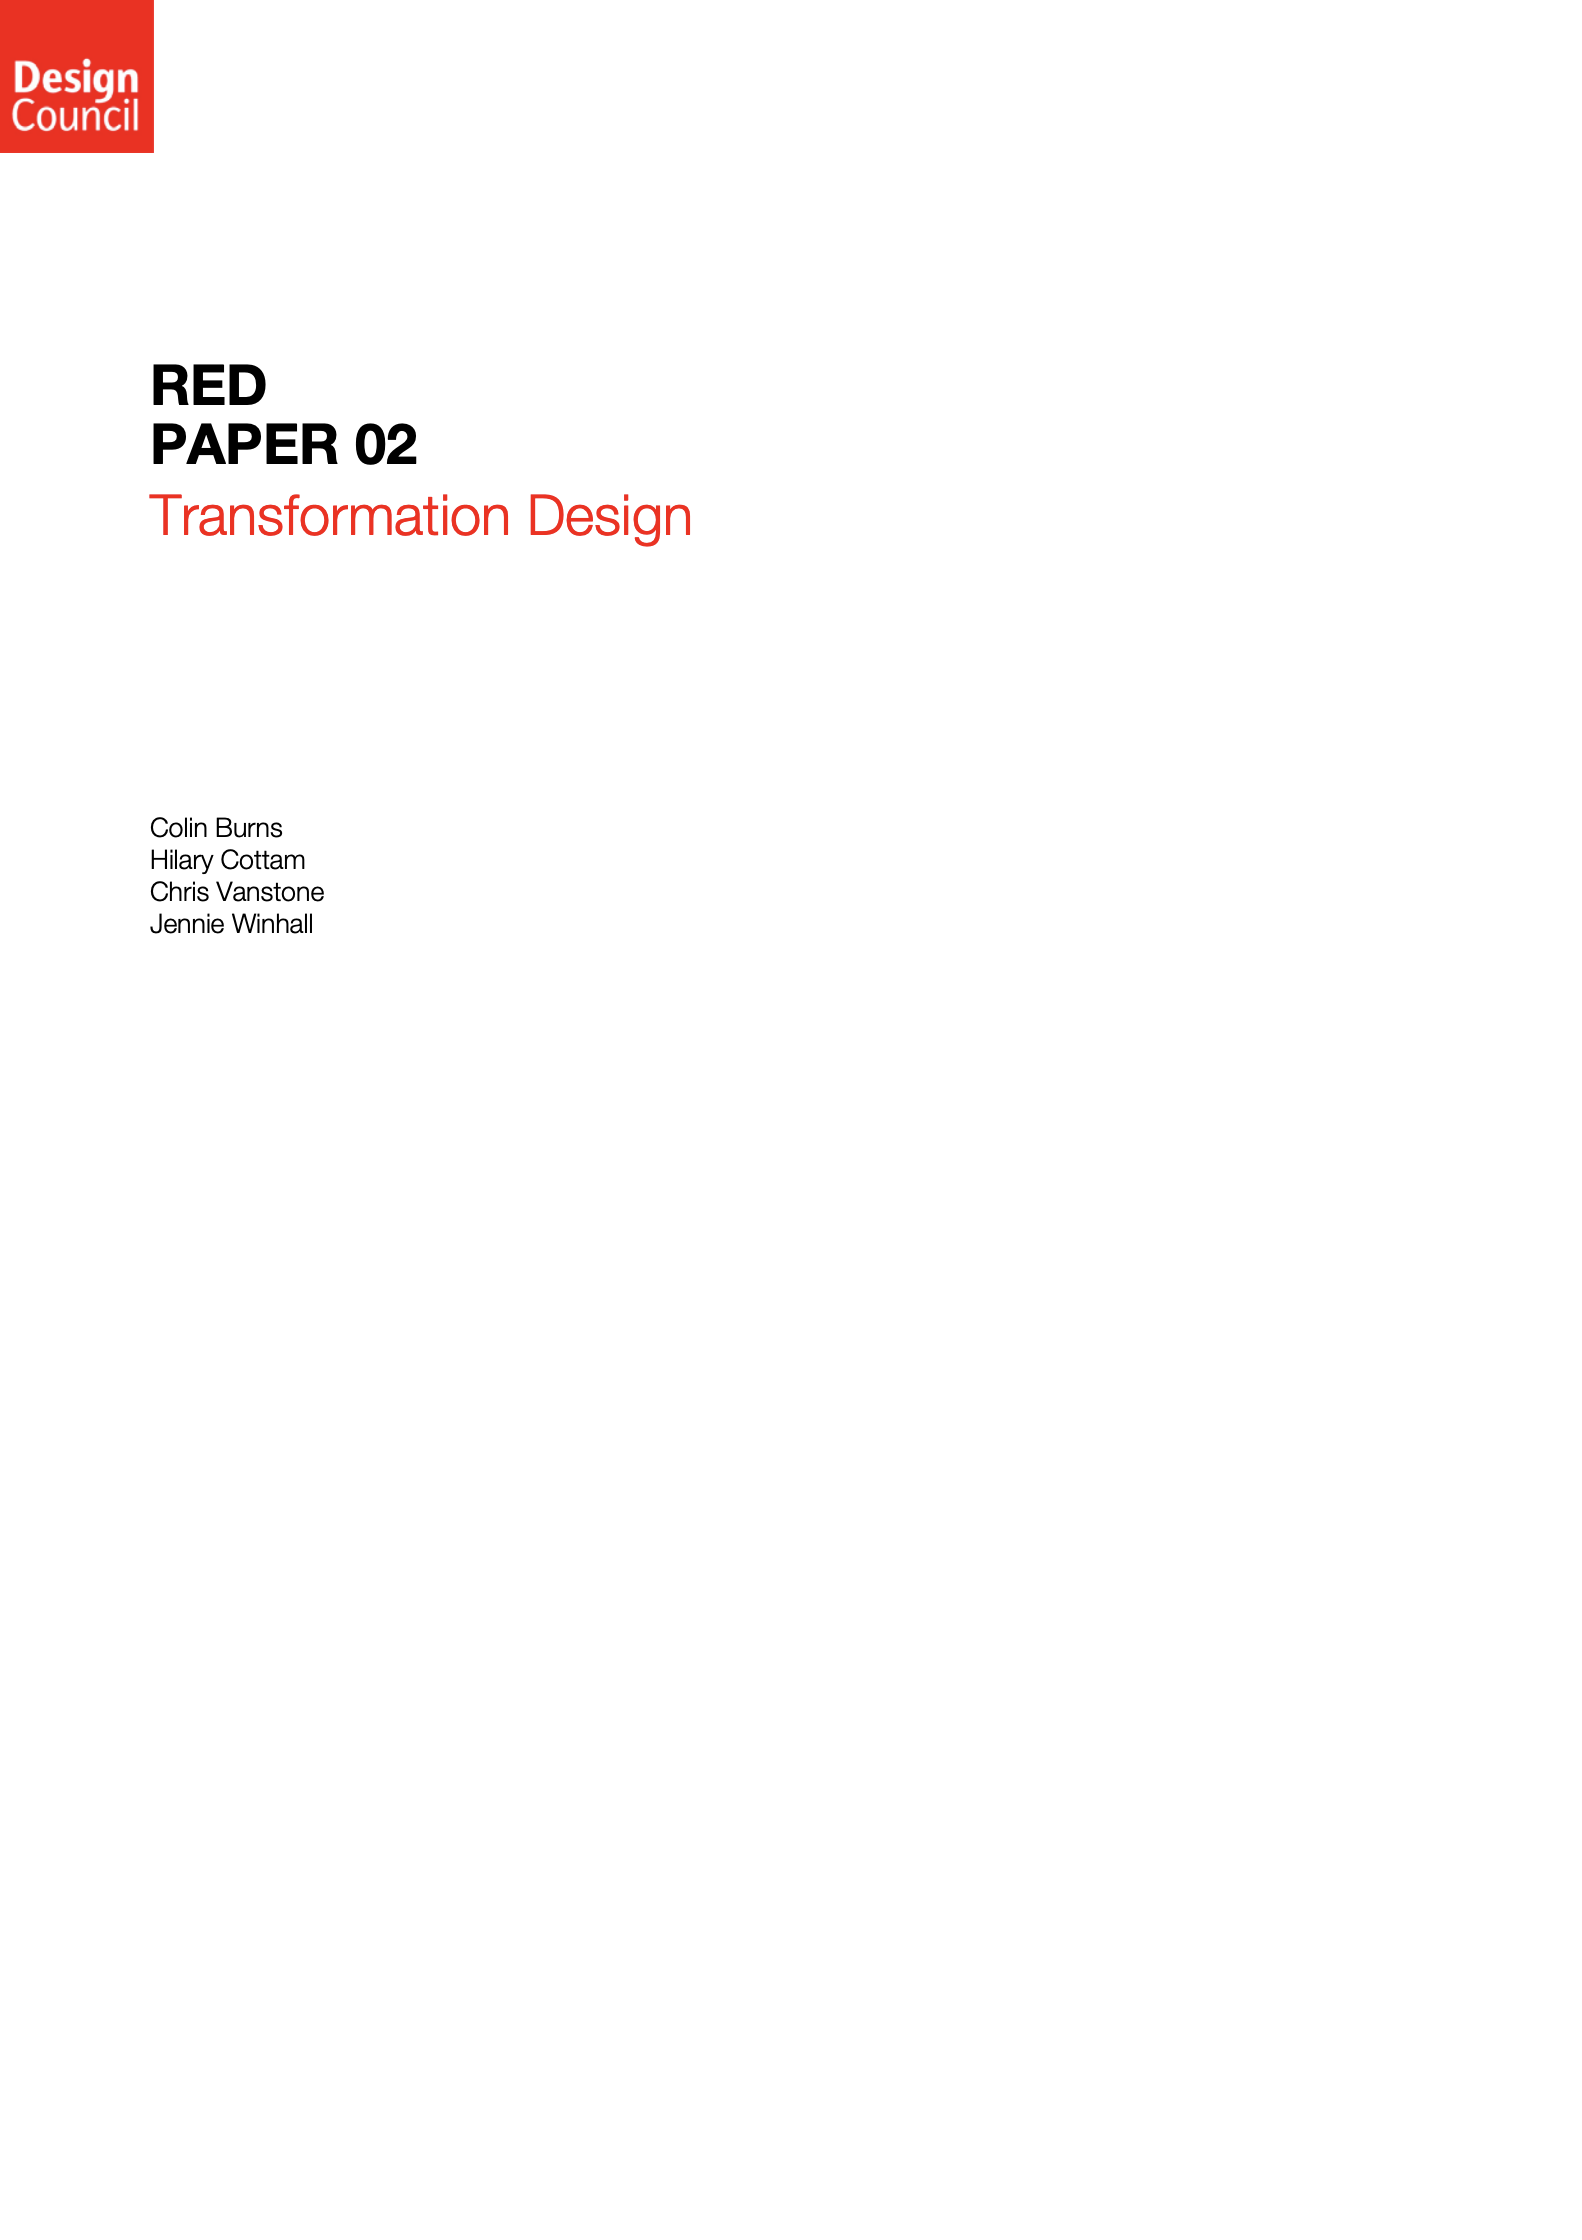 「Red Paper 02: Transformation Design, UK Design Council」